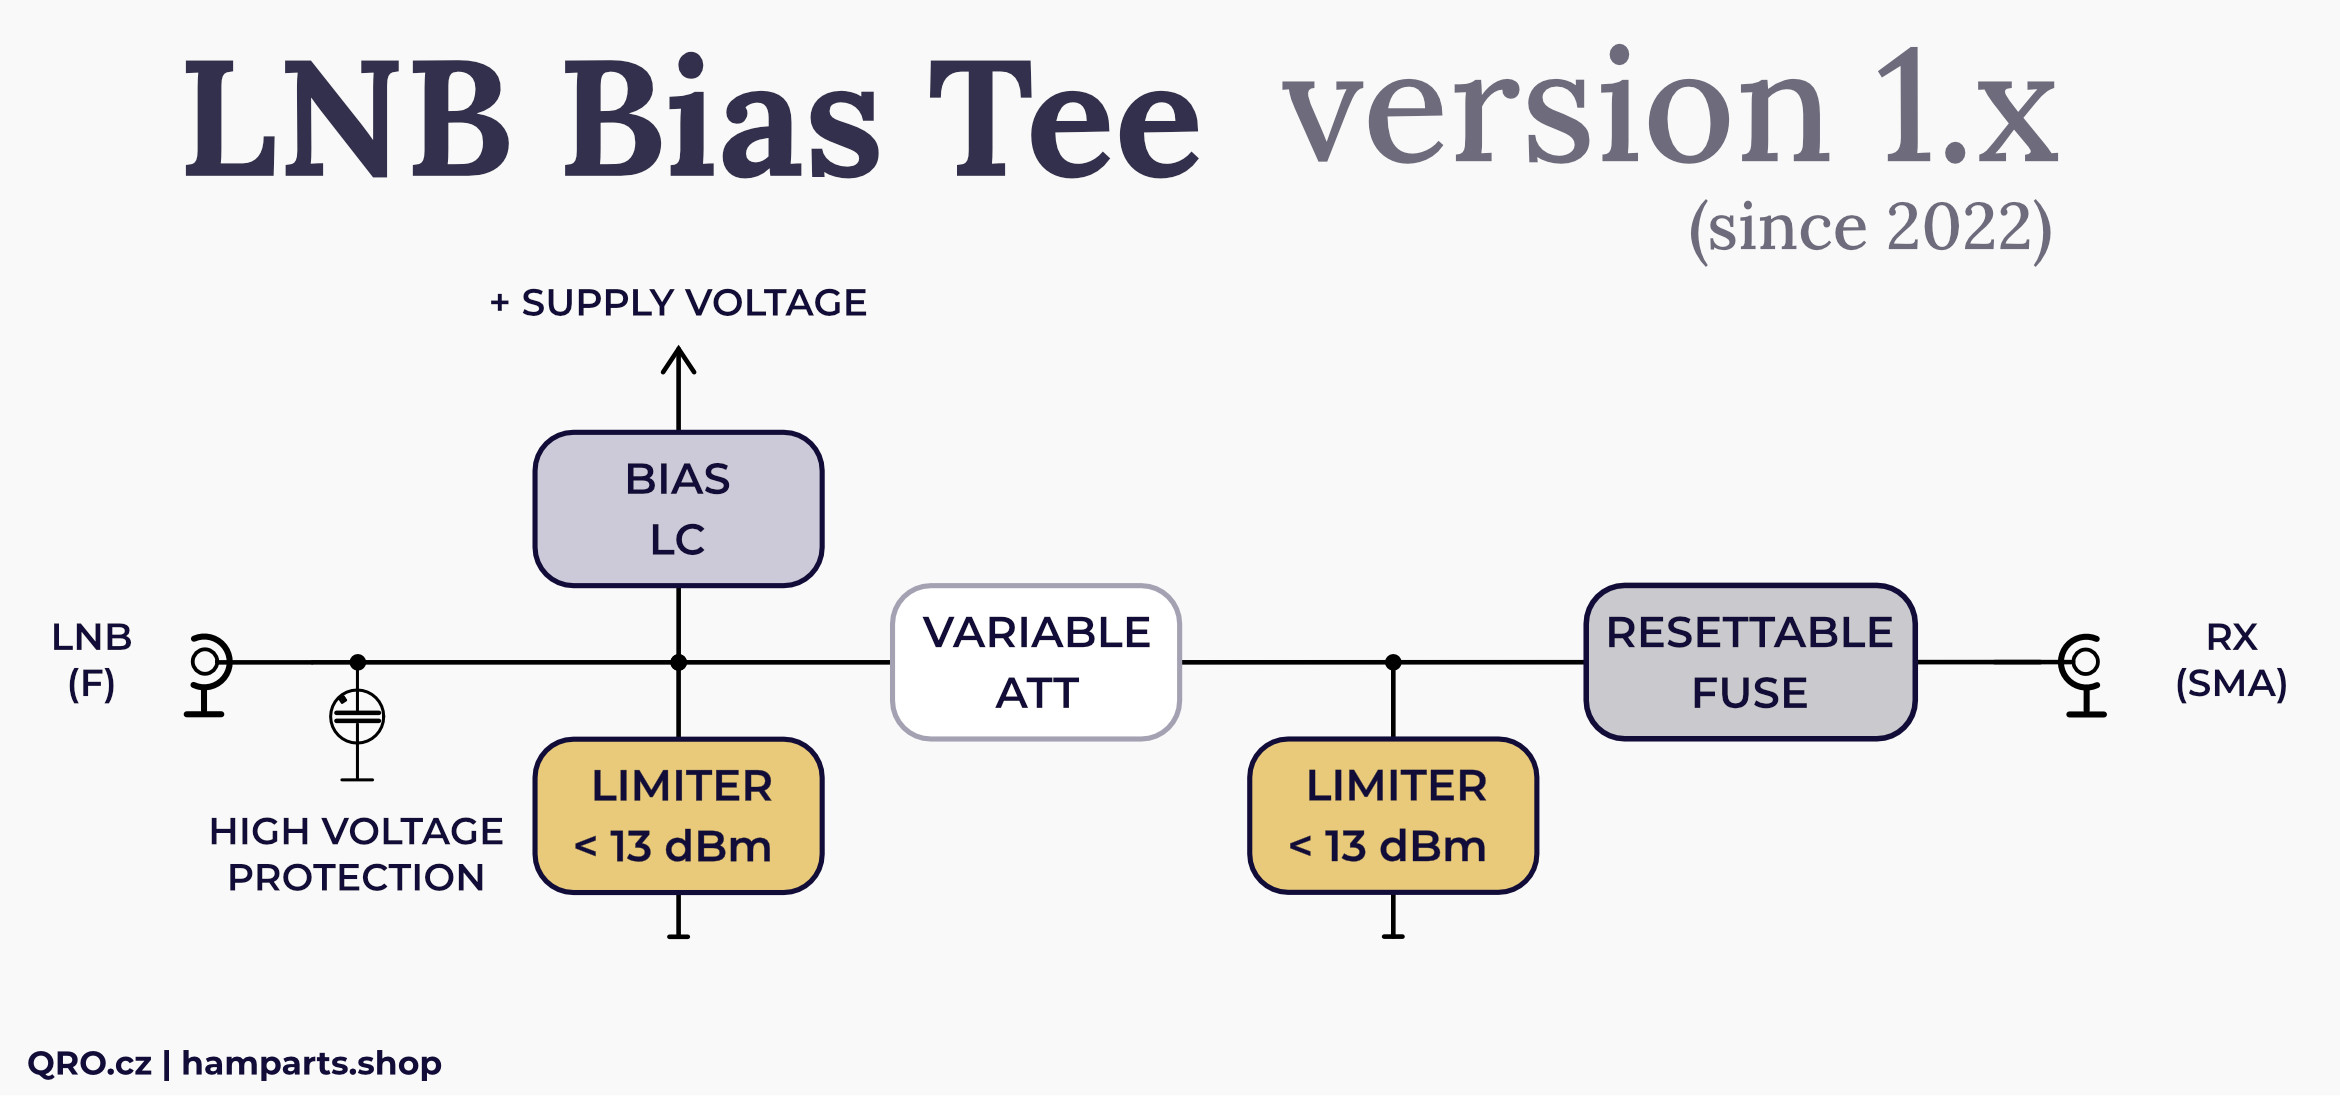 LNB Bias Tee block diagram qro.cz hamparts.shop